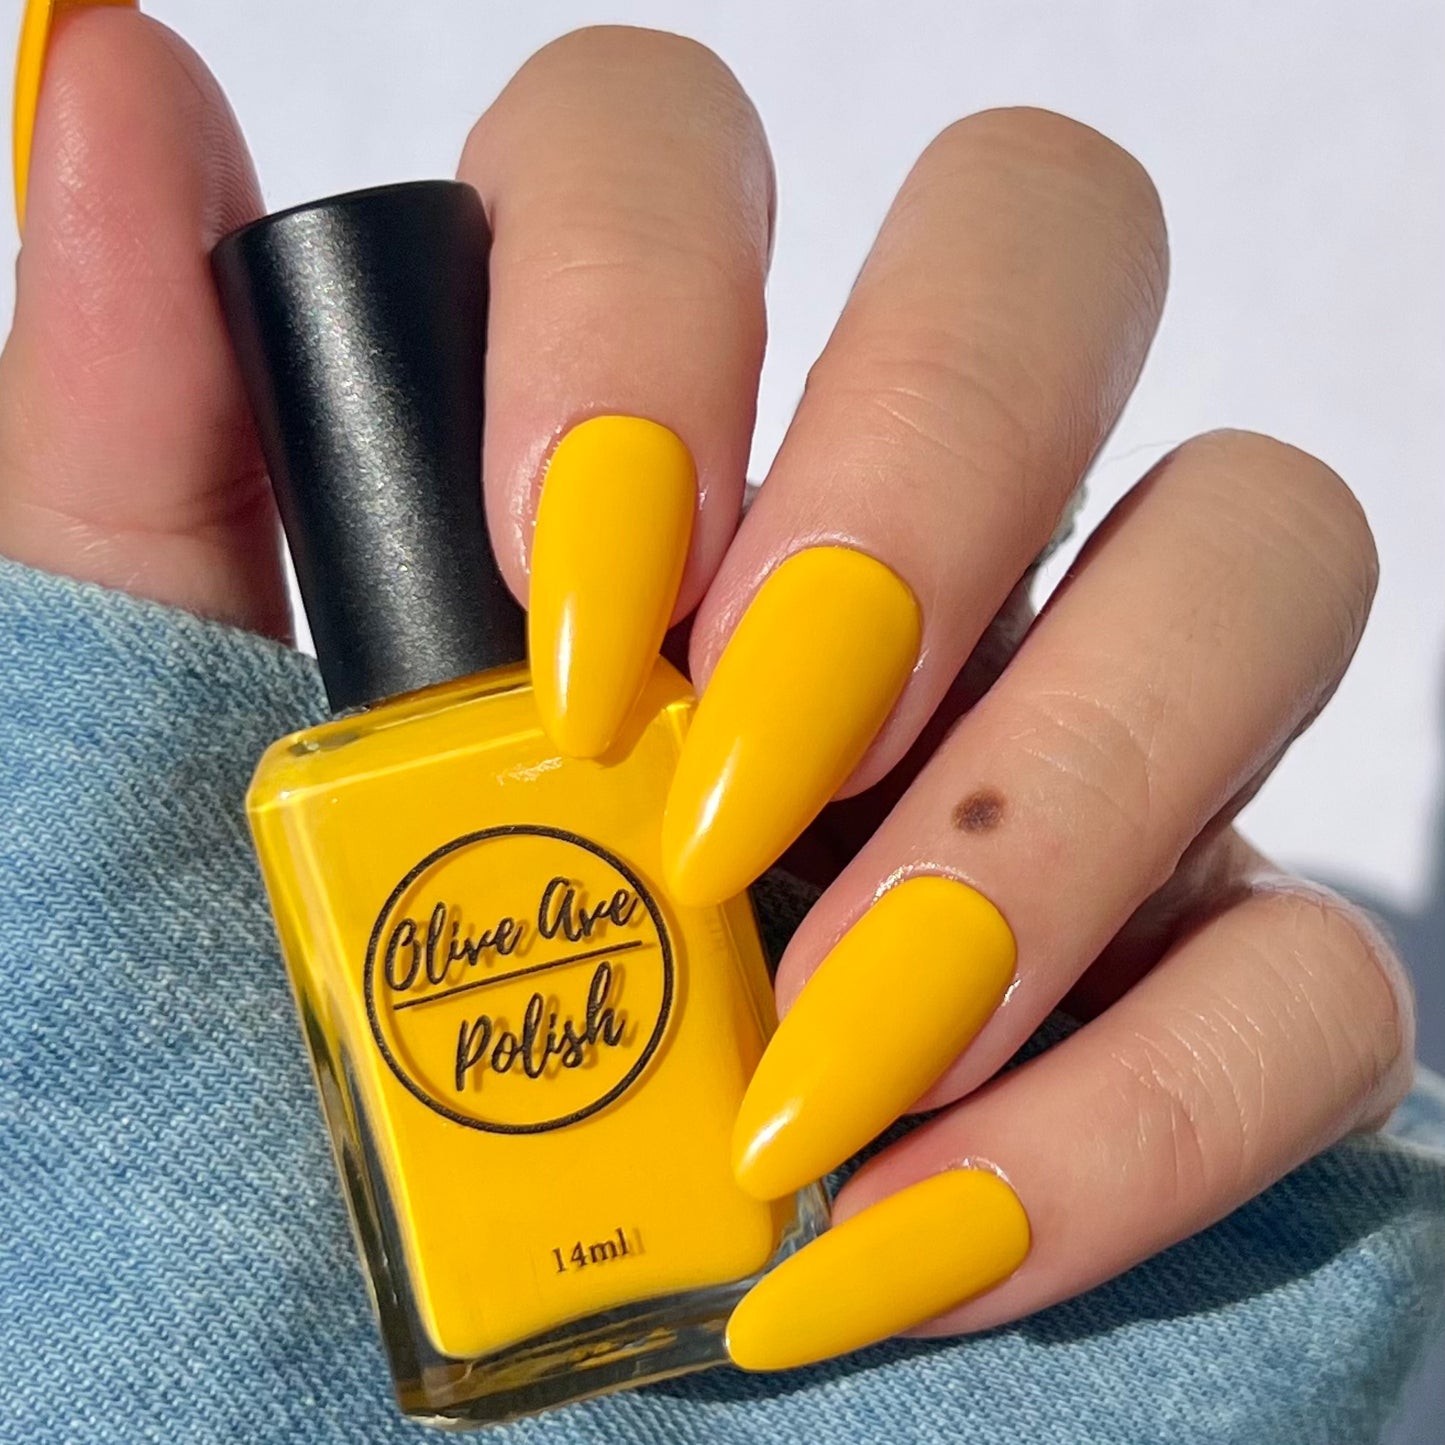 sunny yellow nail polish swatch on pale skin tone